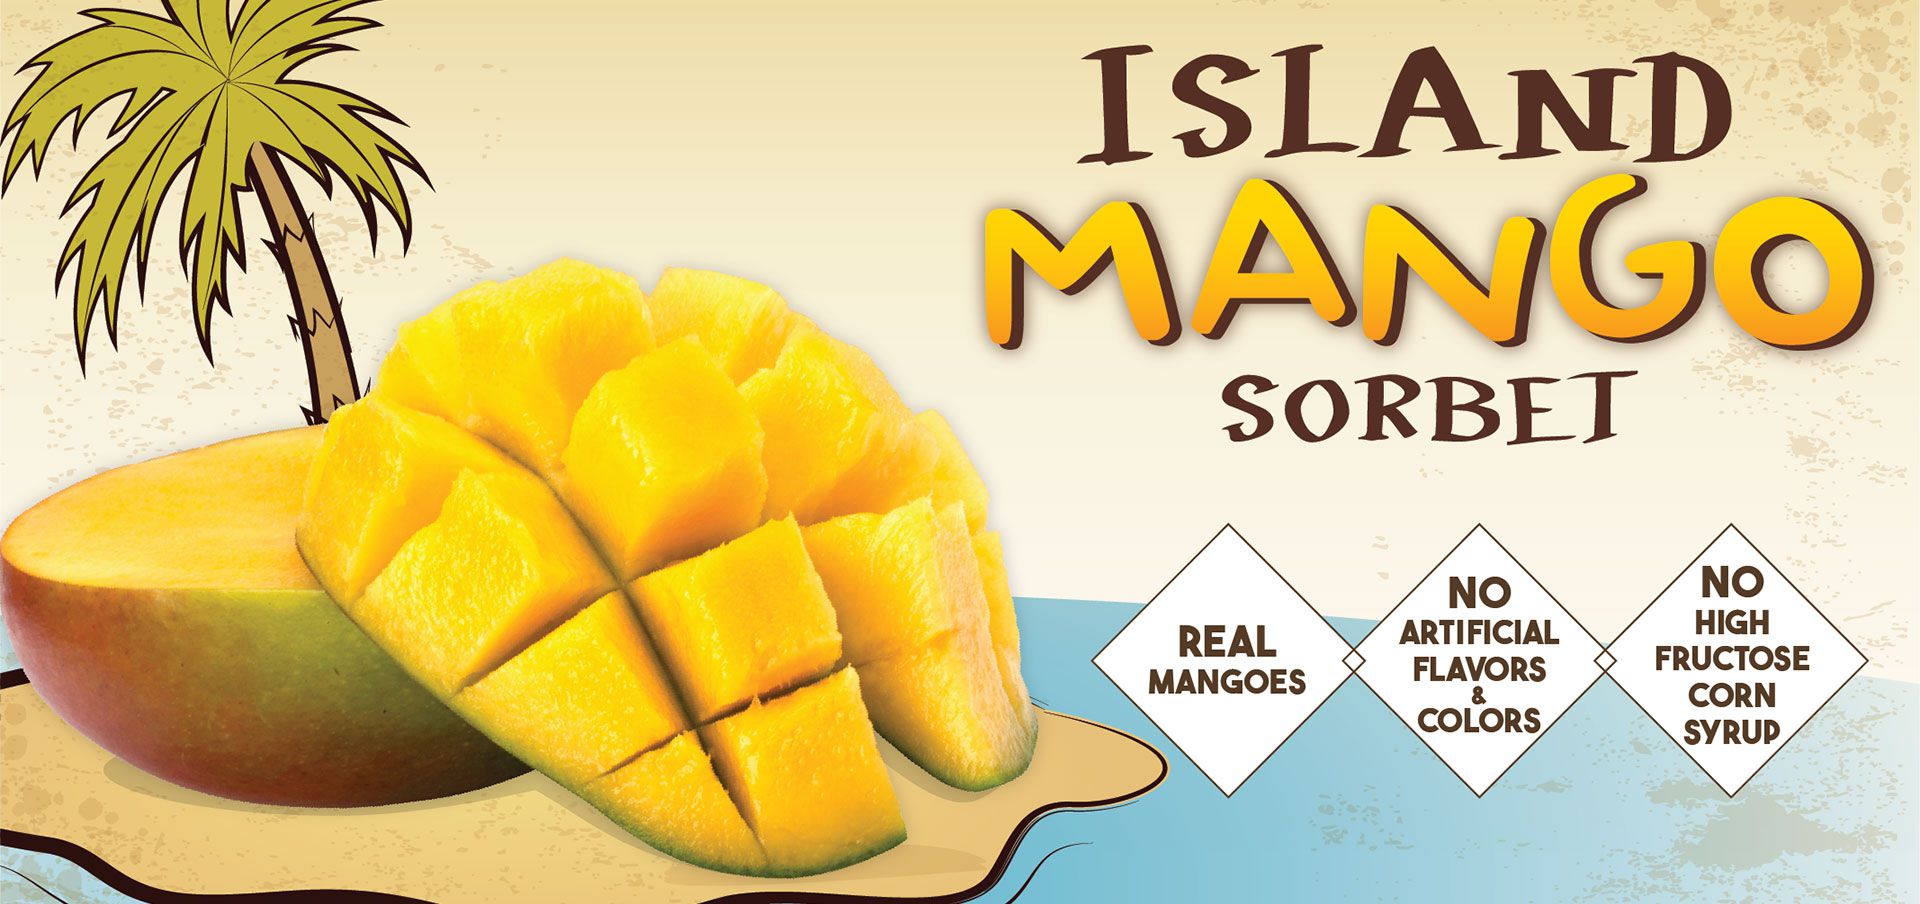 island mango sorbet label image